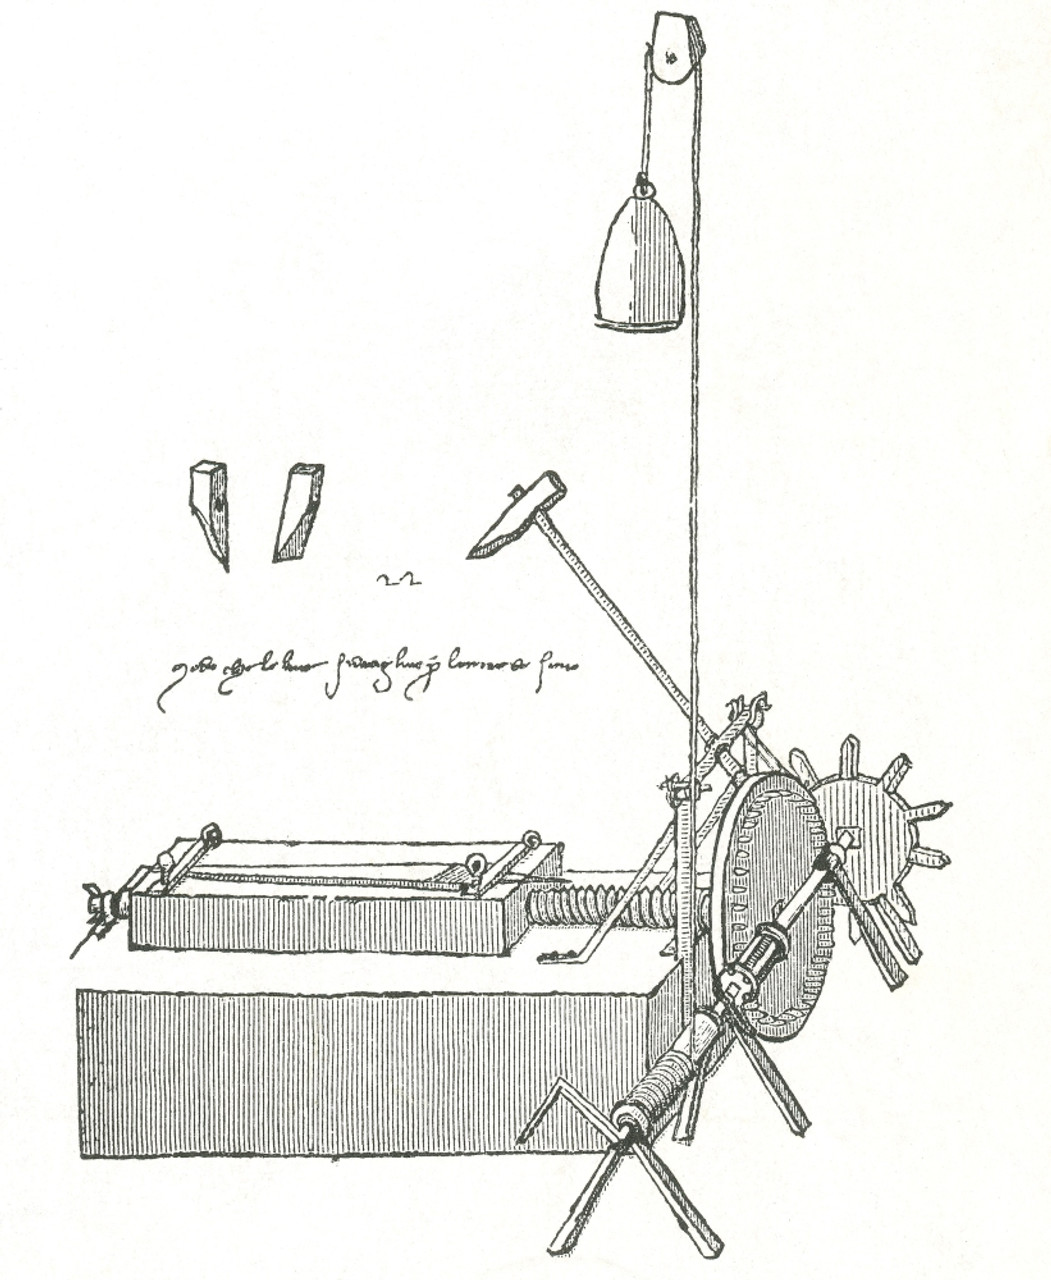 Schematic diagram of cutting and chopping machine.